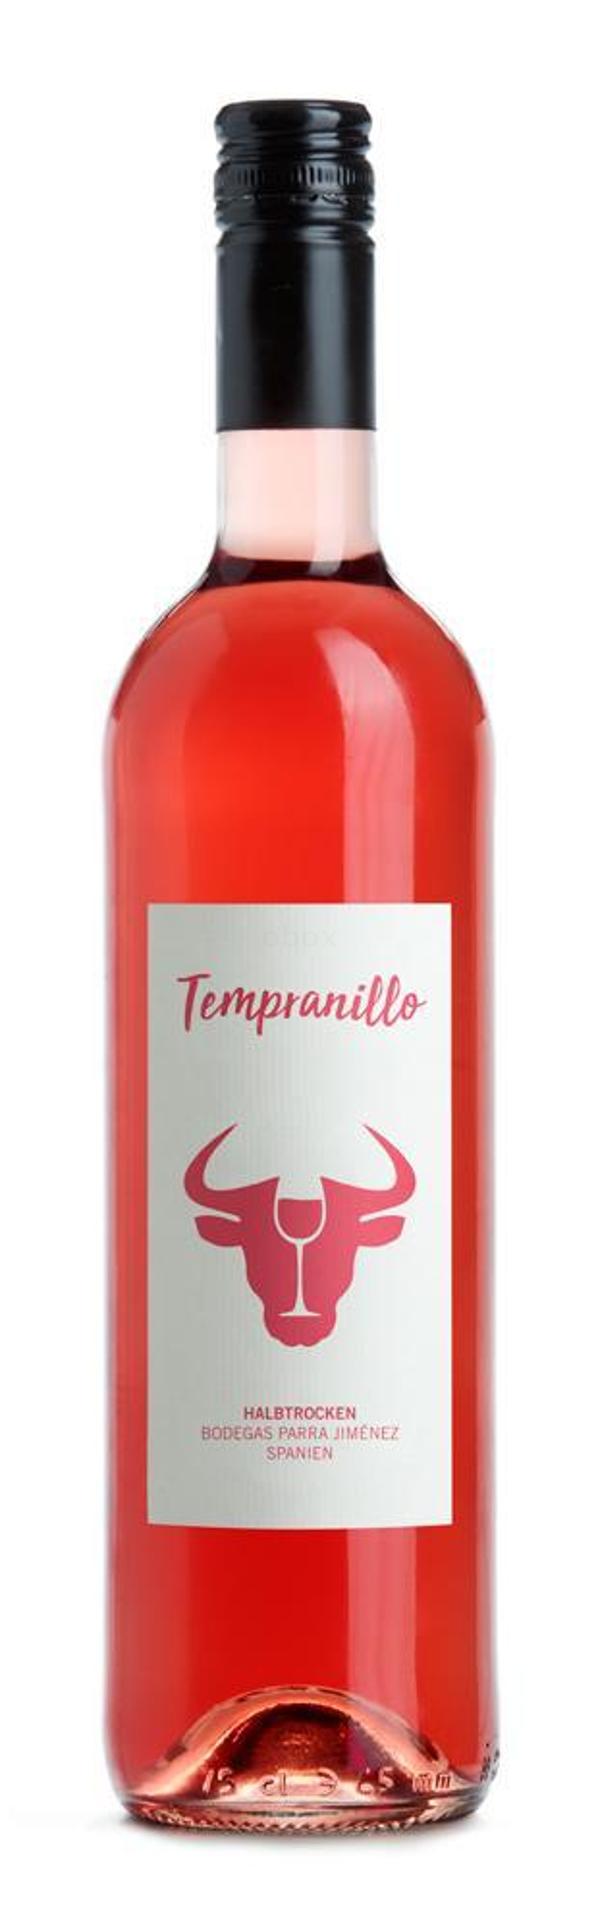 Produktfoto zu Tempranillo rosé 0,75l